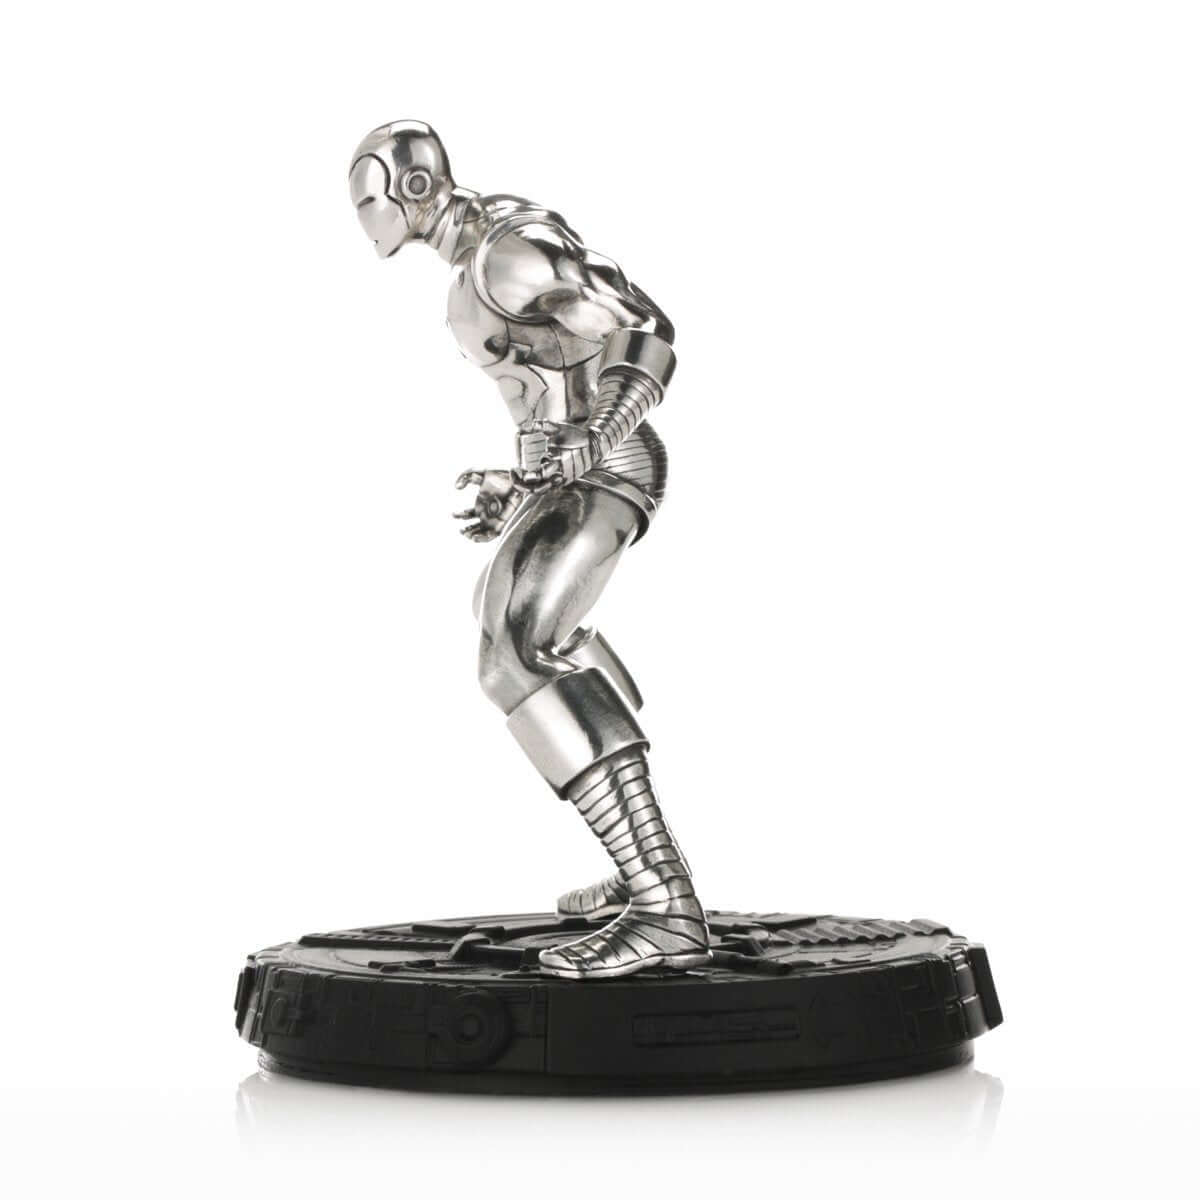 Iron Man Invincible Figurine - Marvel Collectible Statue